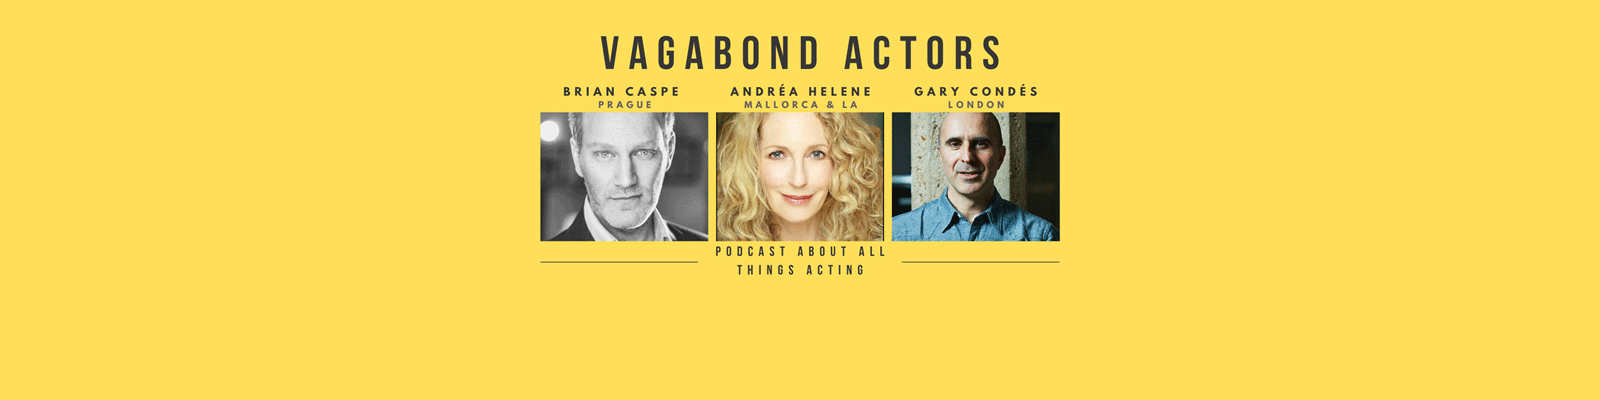 The Vagabond Actor's Podcast